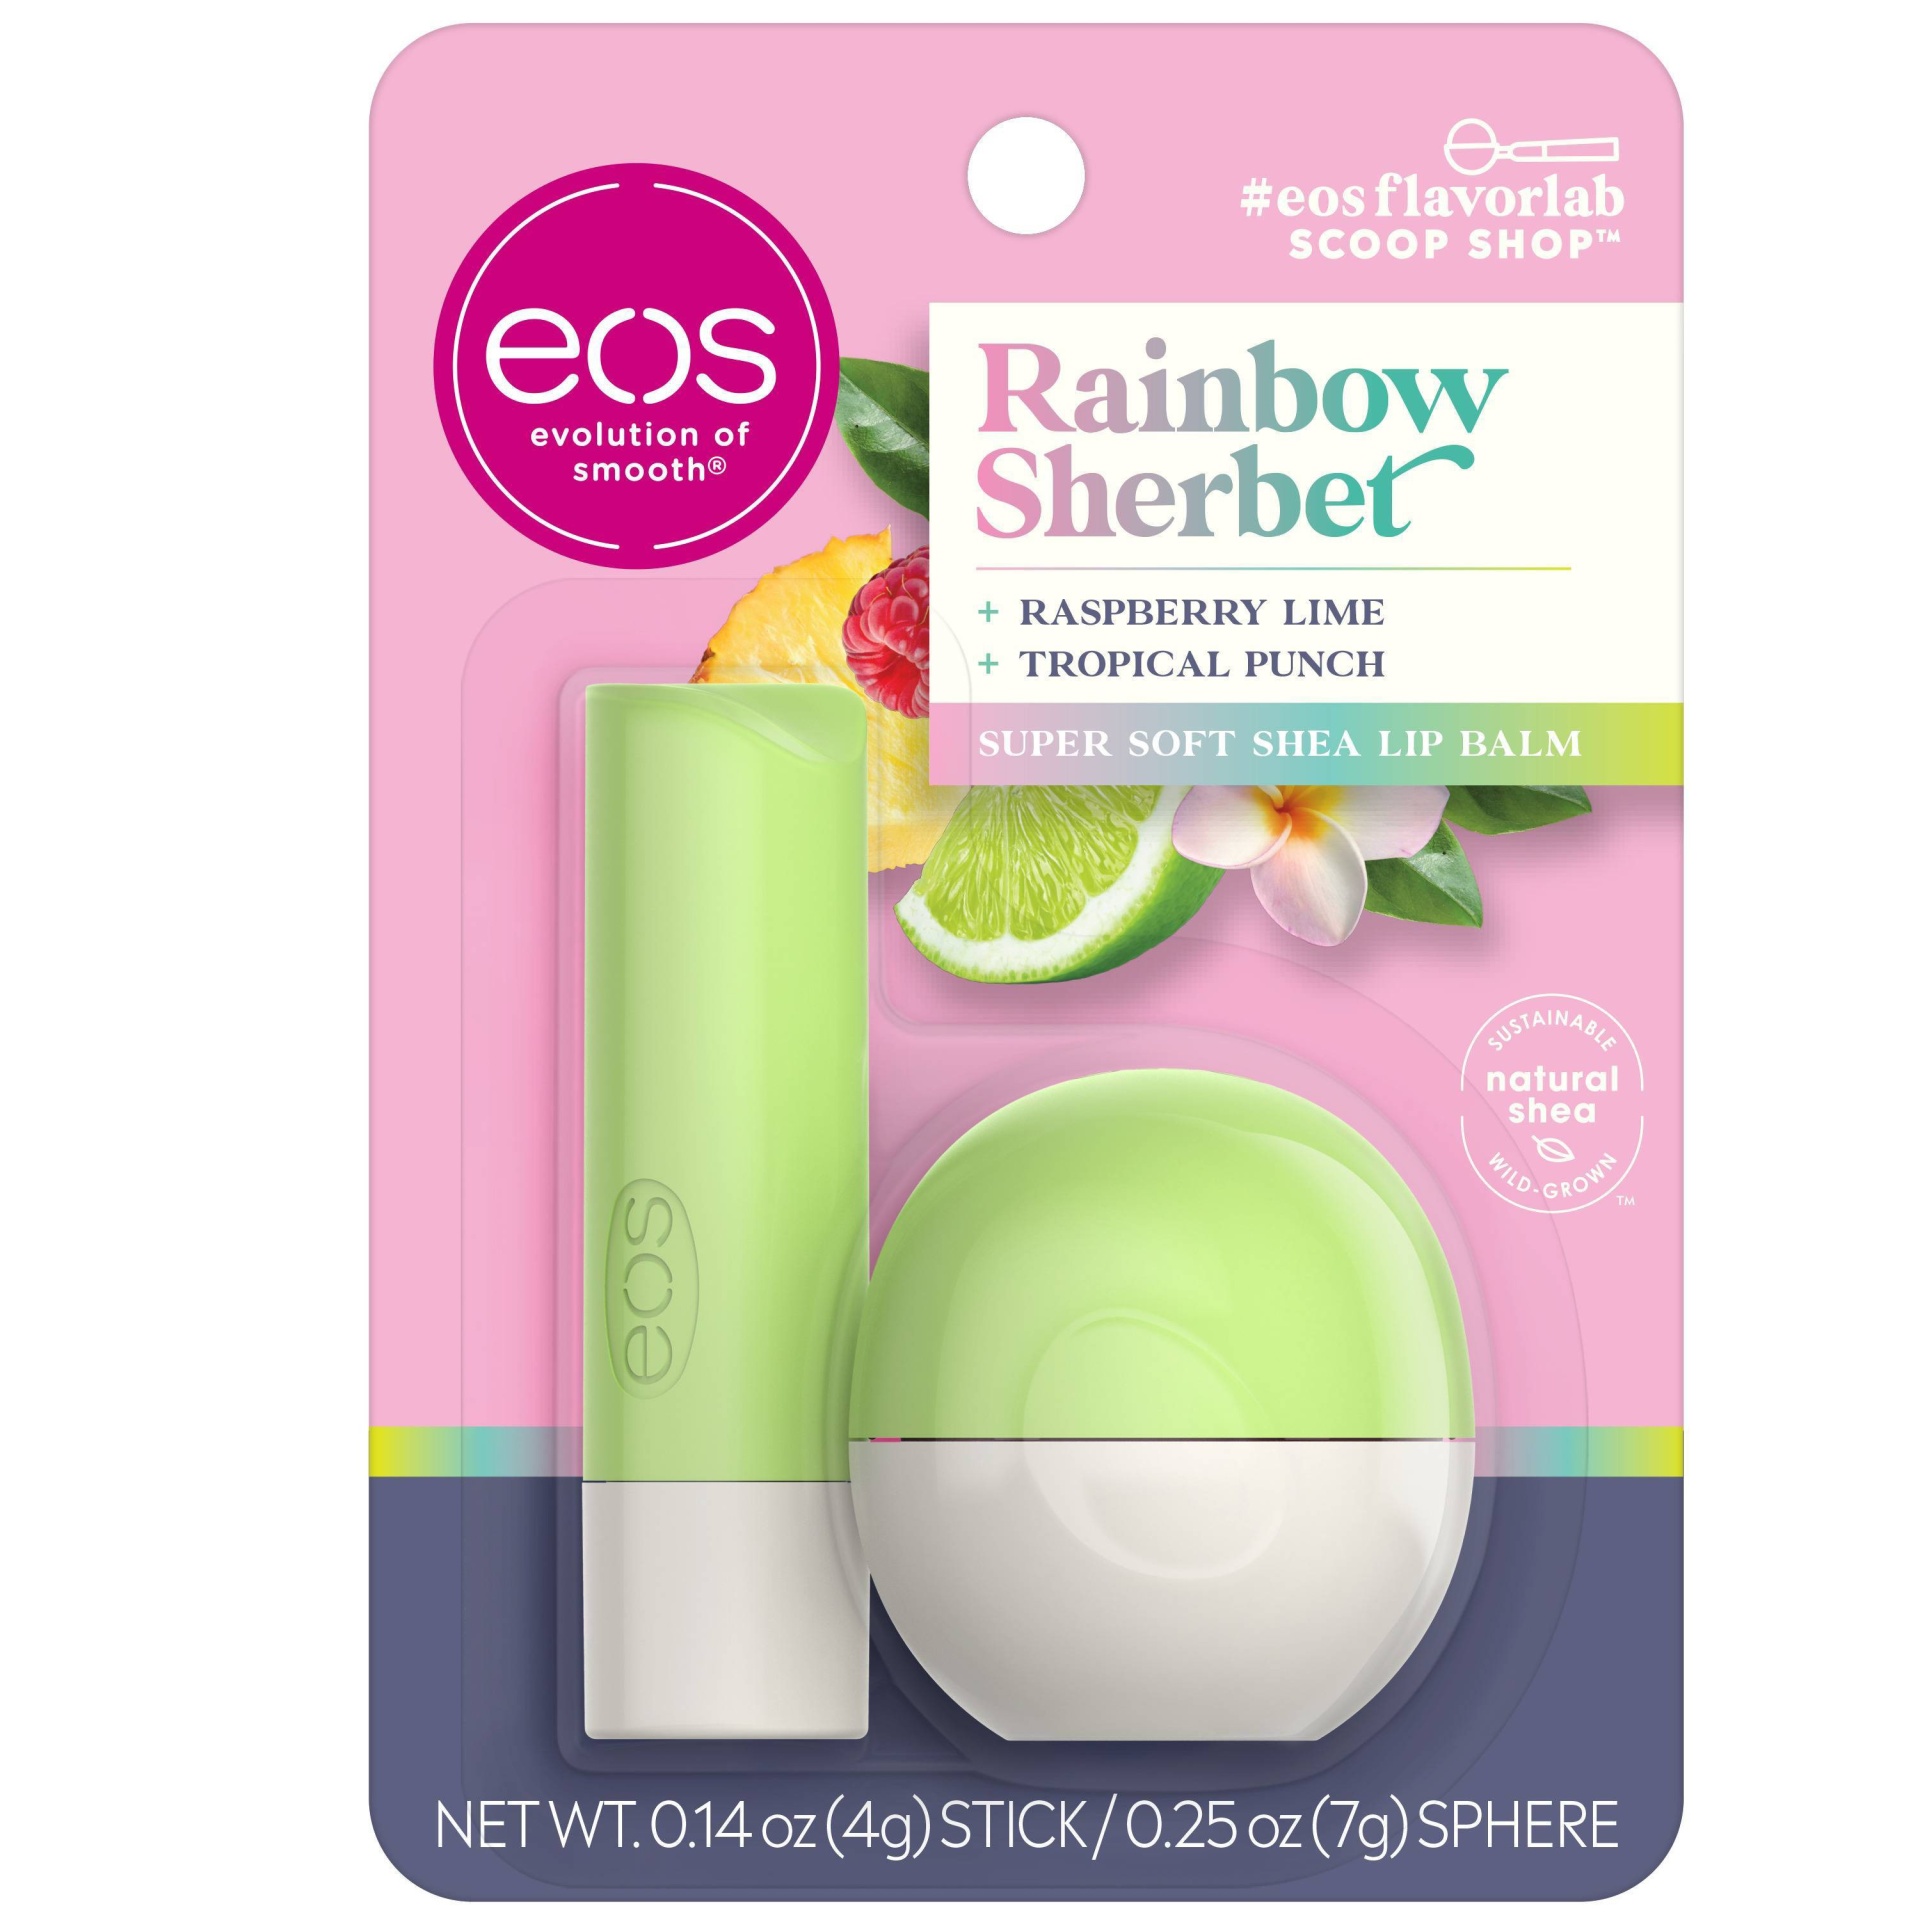 eos Rainbow Sherbet Lip Balm & Sphere 2 ct, 0.39 oz | Shipt